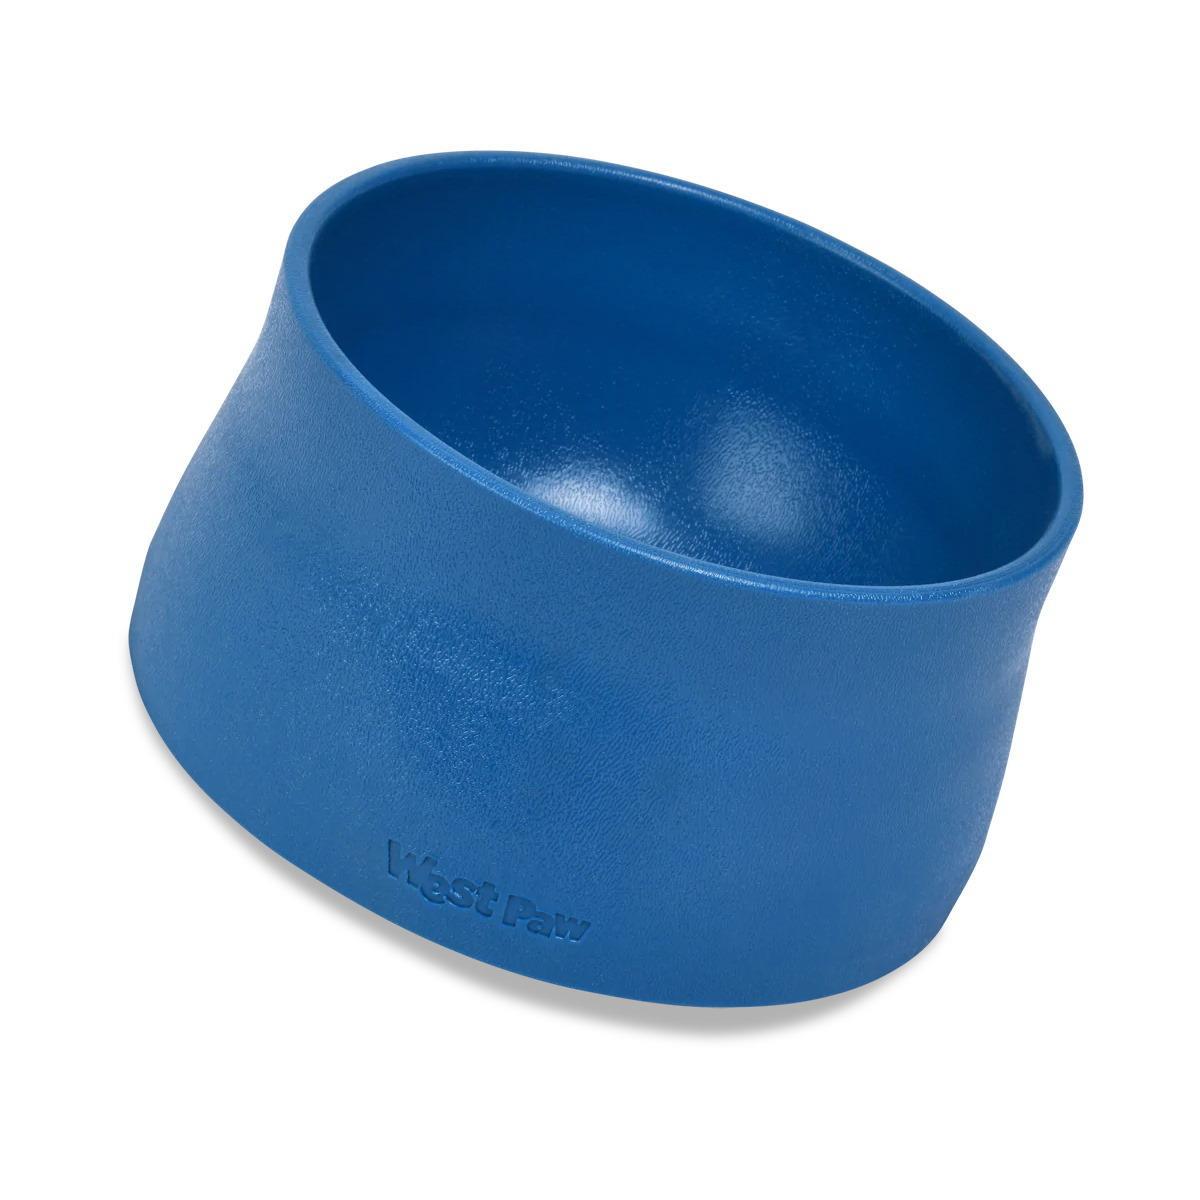 West Paw Seaflex Eco-Friendly No-Slip Dog Food Bowl - Marine Blue